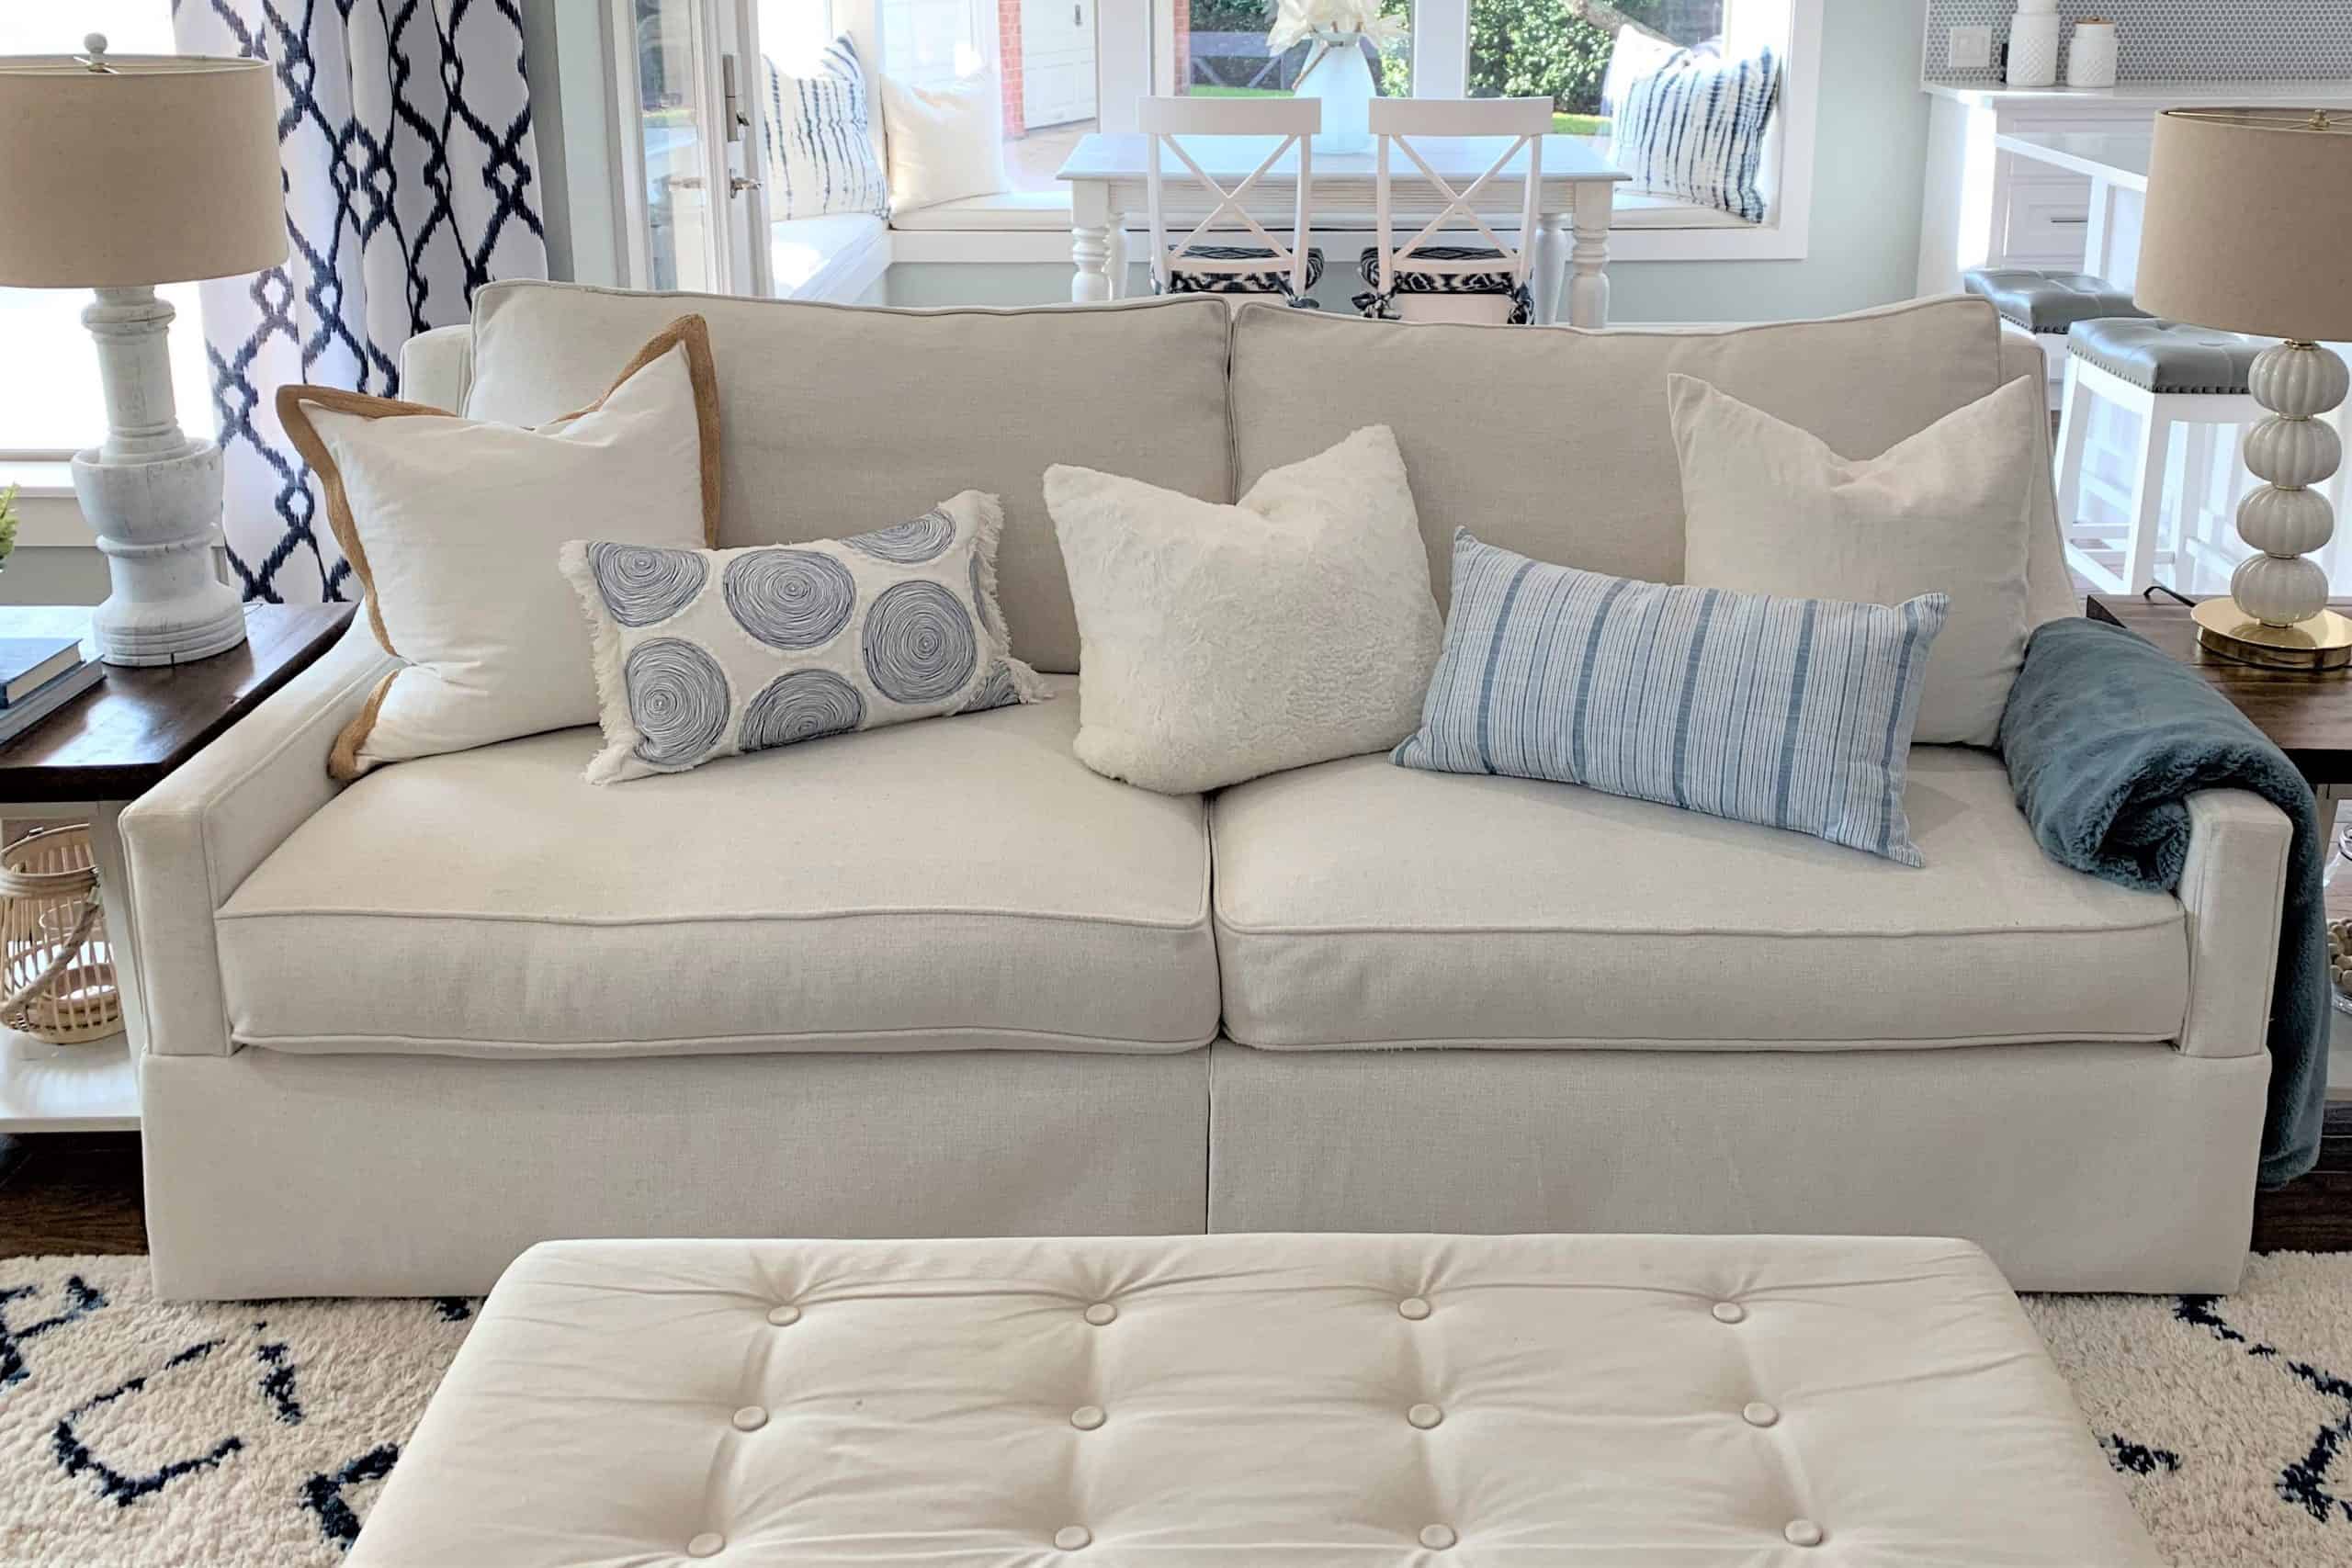 How Do I Re-Stuff Sofa Cushions